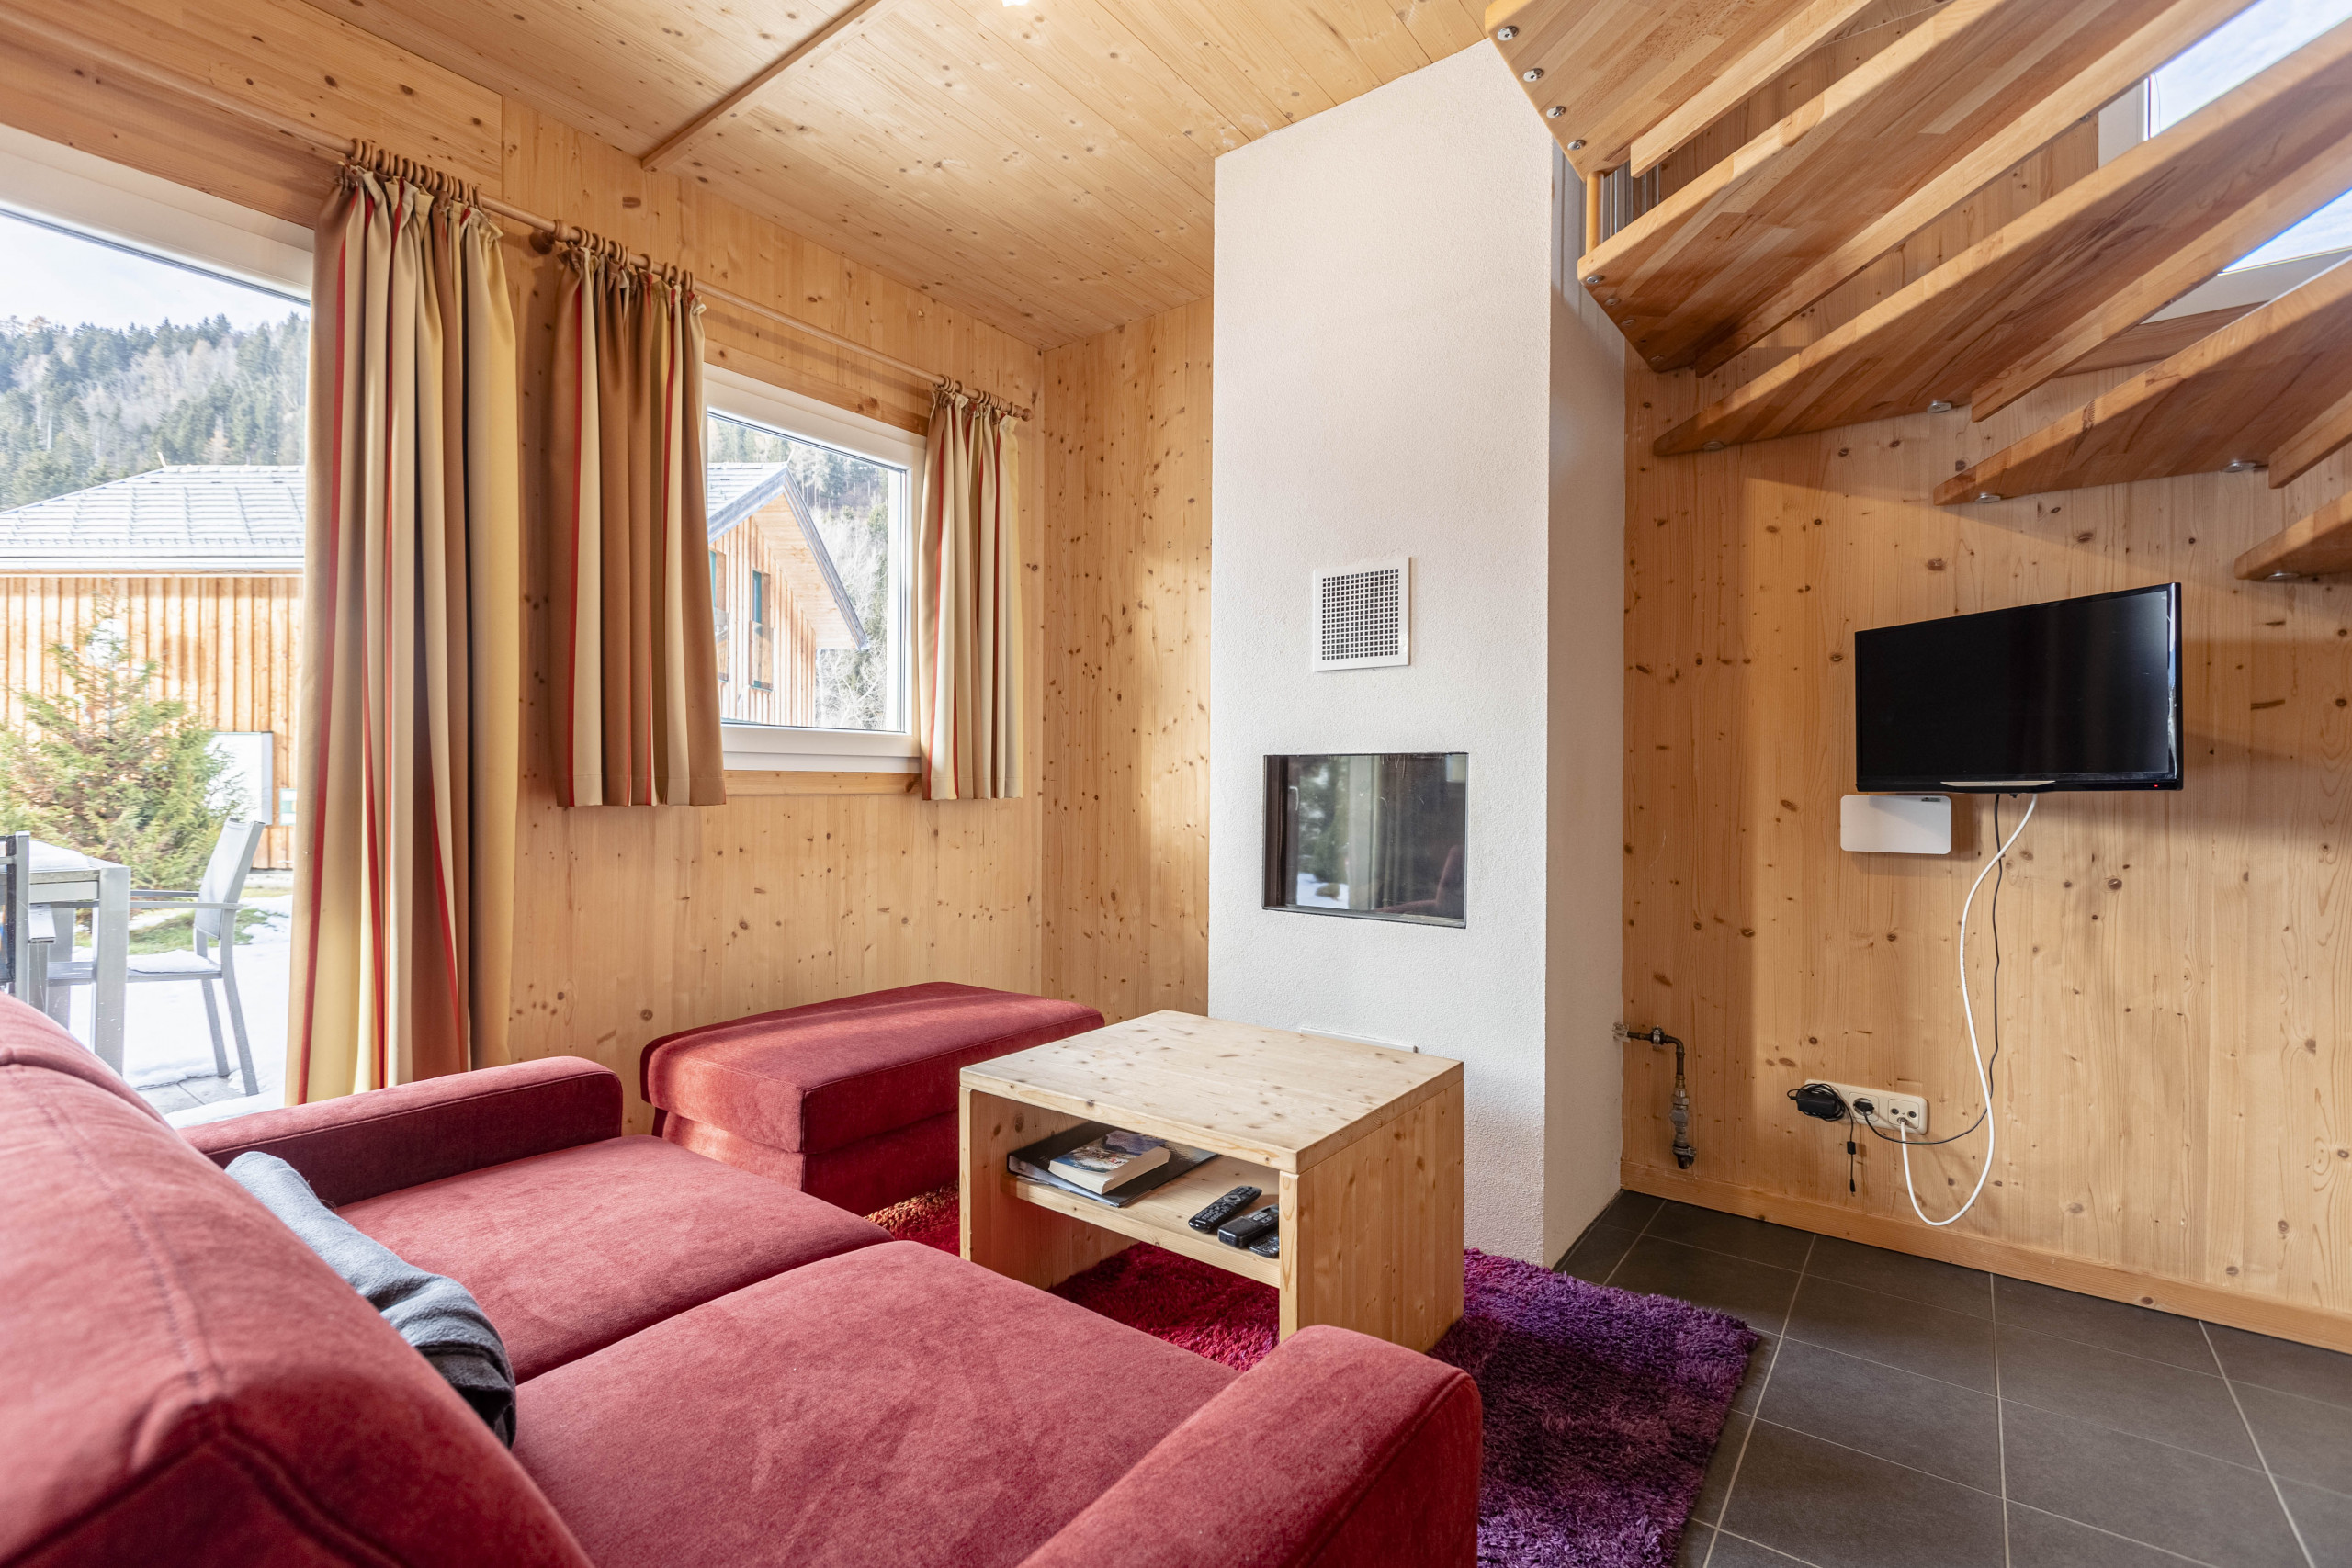  in Murau - Chalet # 21b with 3 bedrooms & IR-sauna